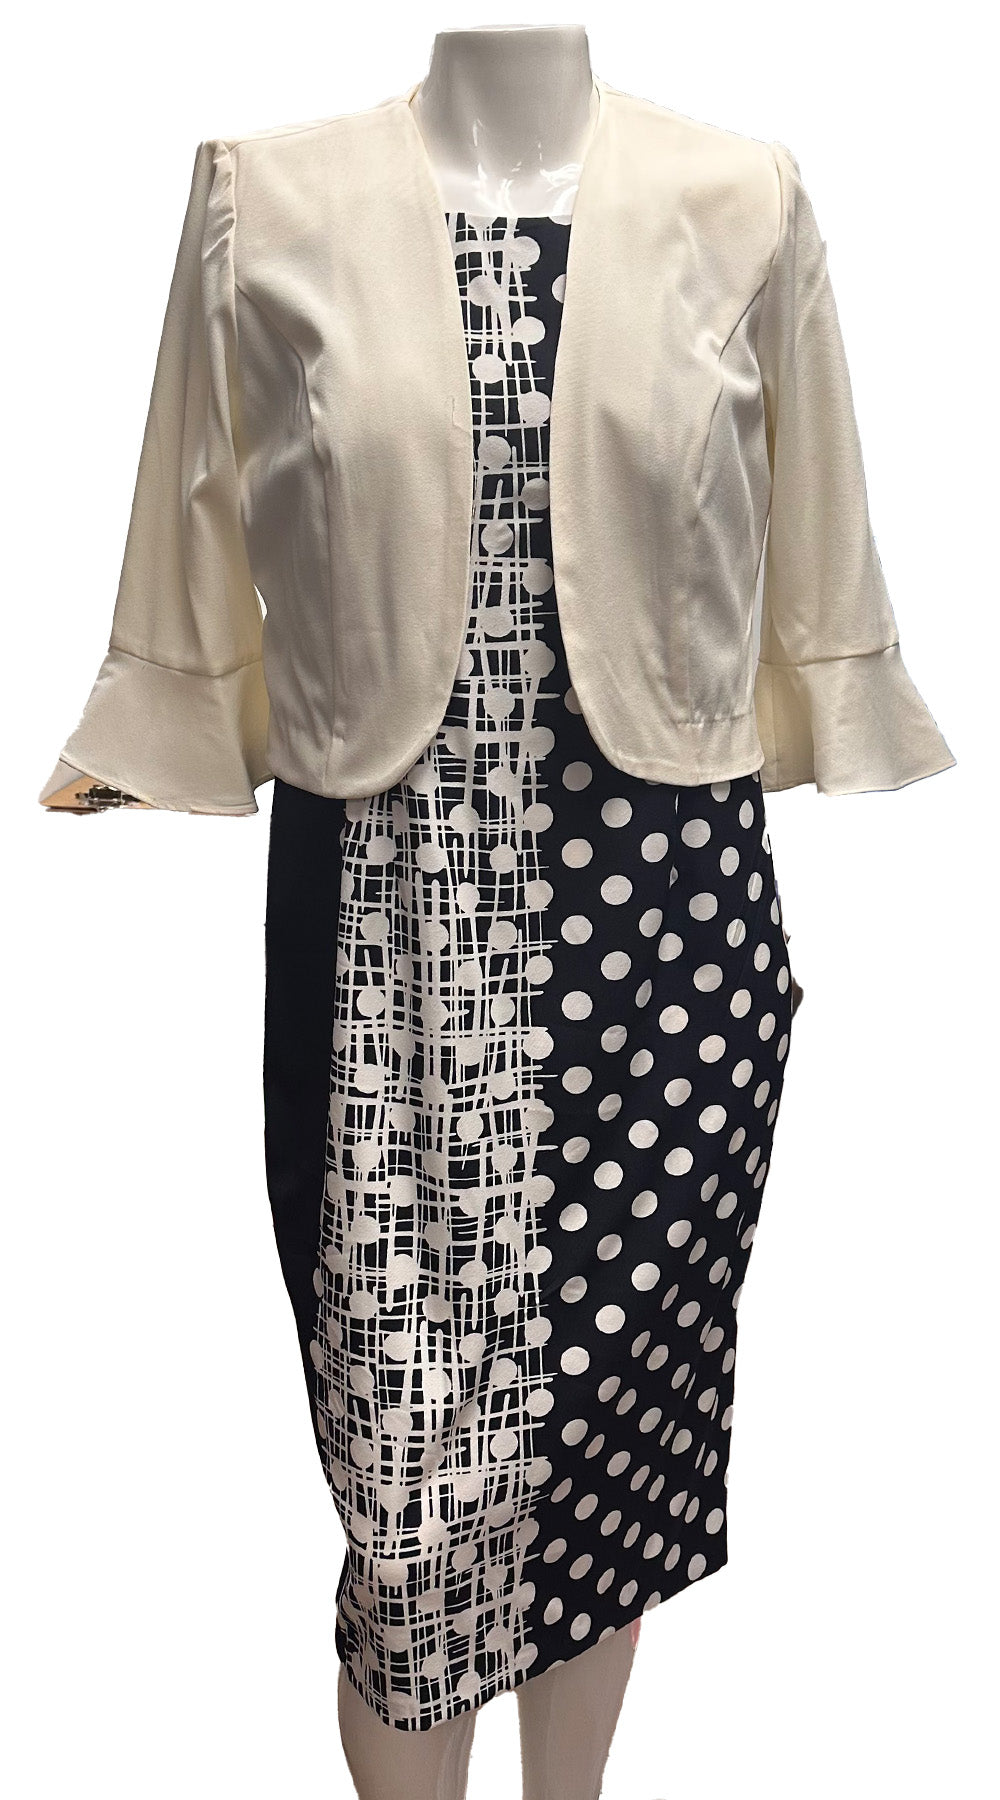 Maya Brooke Jacket Dress 28366 - Church Suits For Less